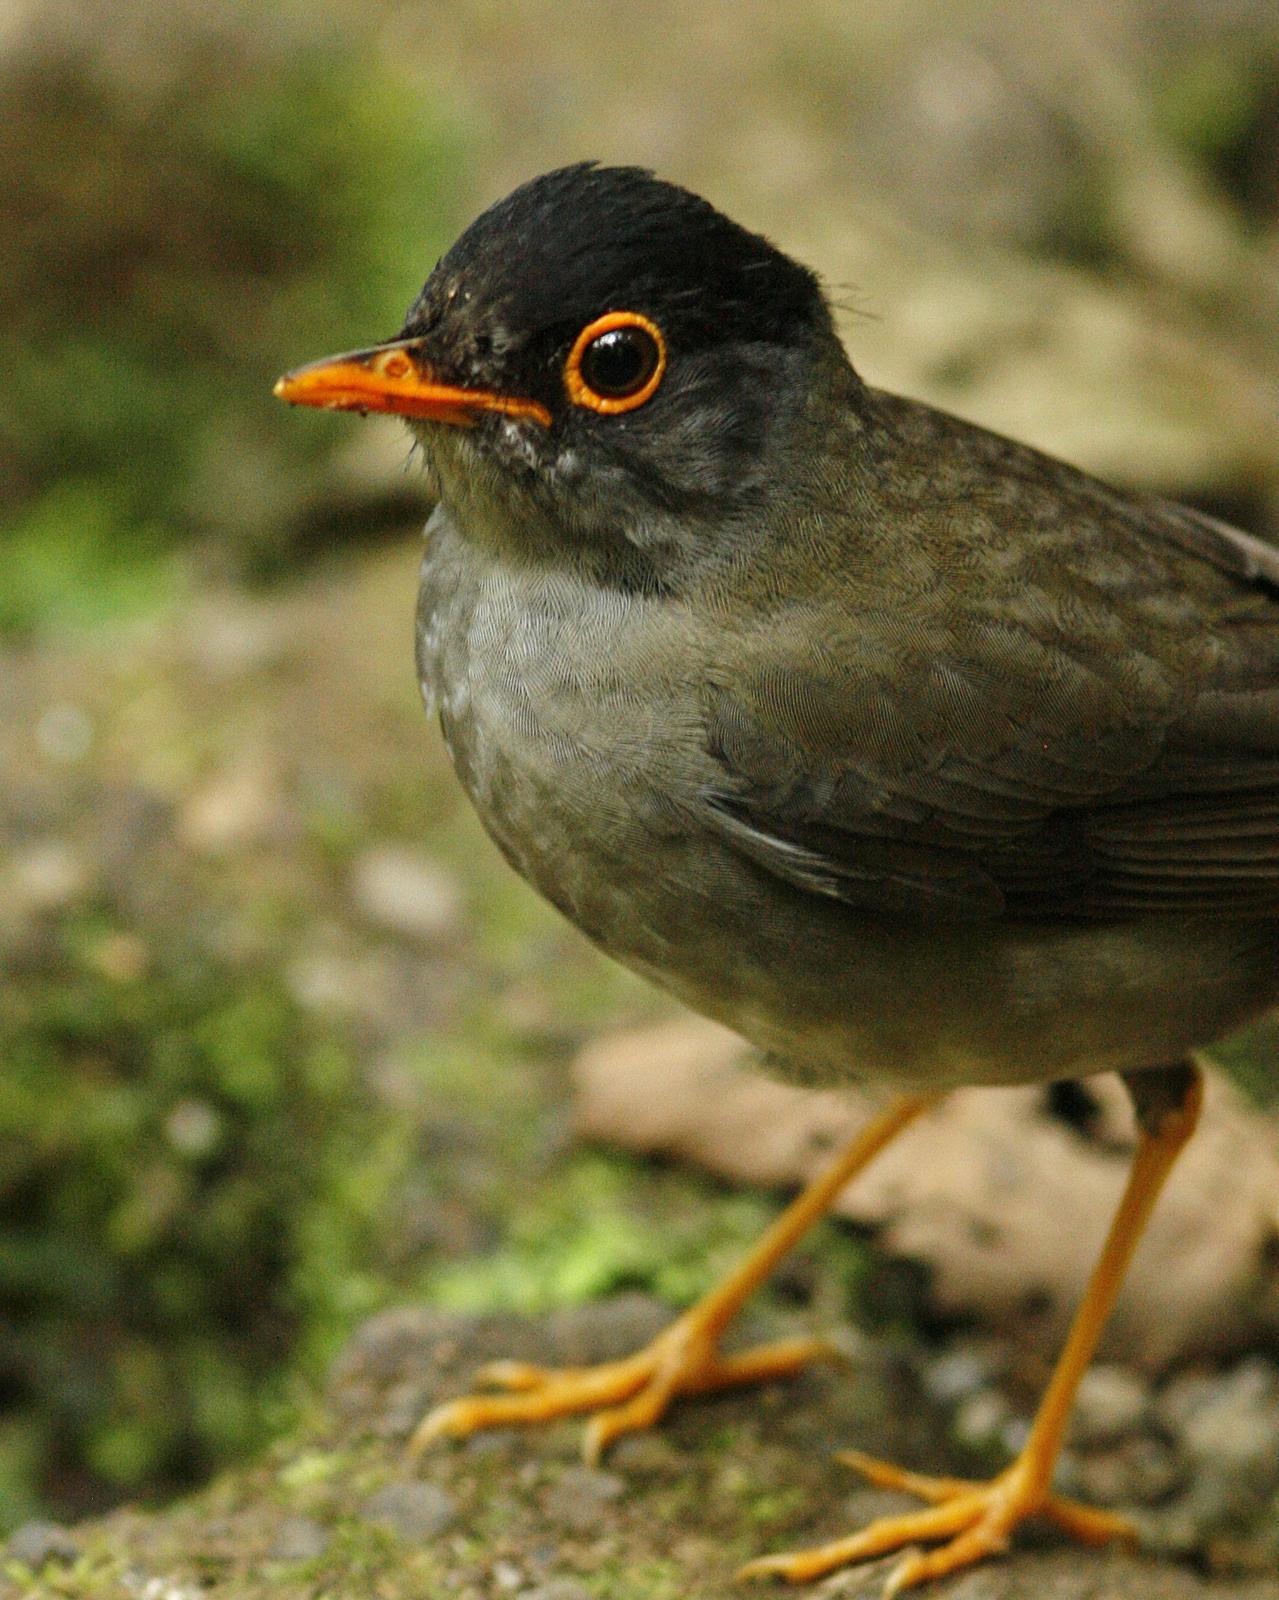 Black-headed Nightingale-Thrush Photo by Oscar Johnson